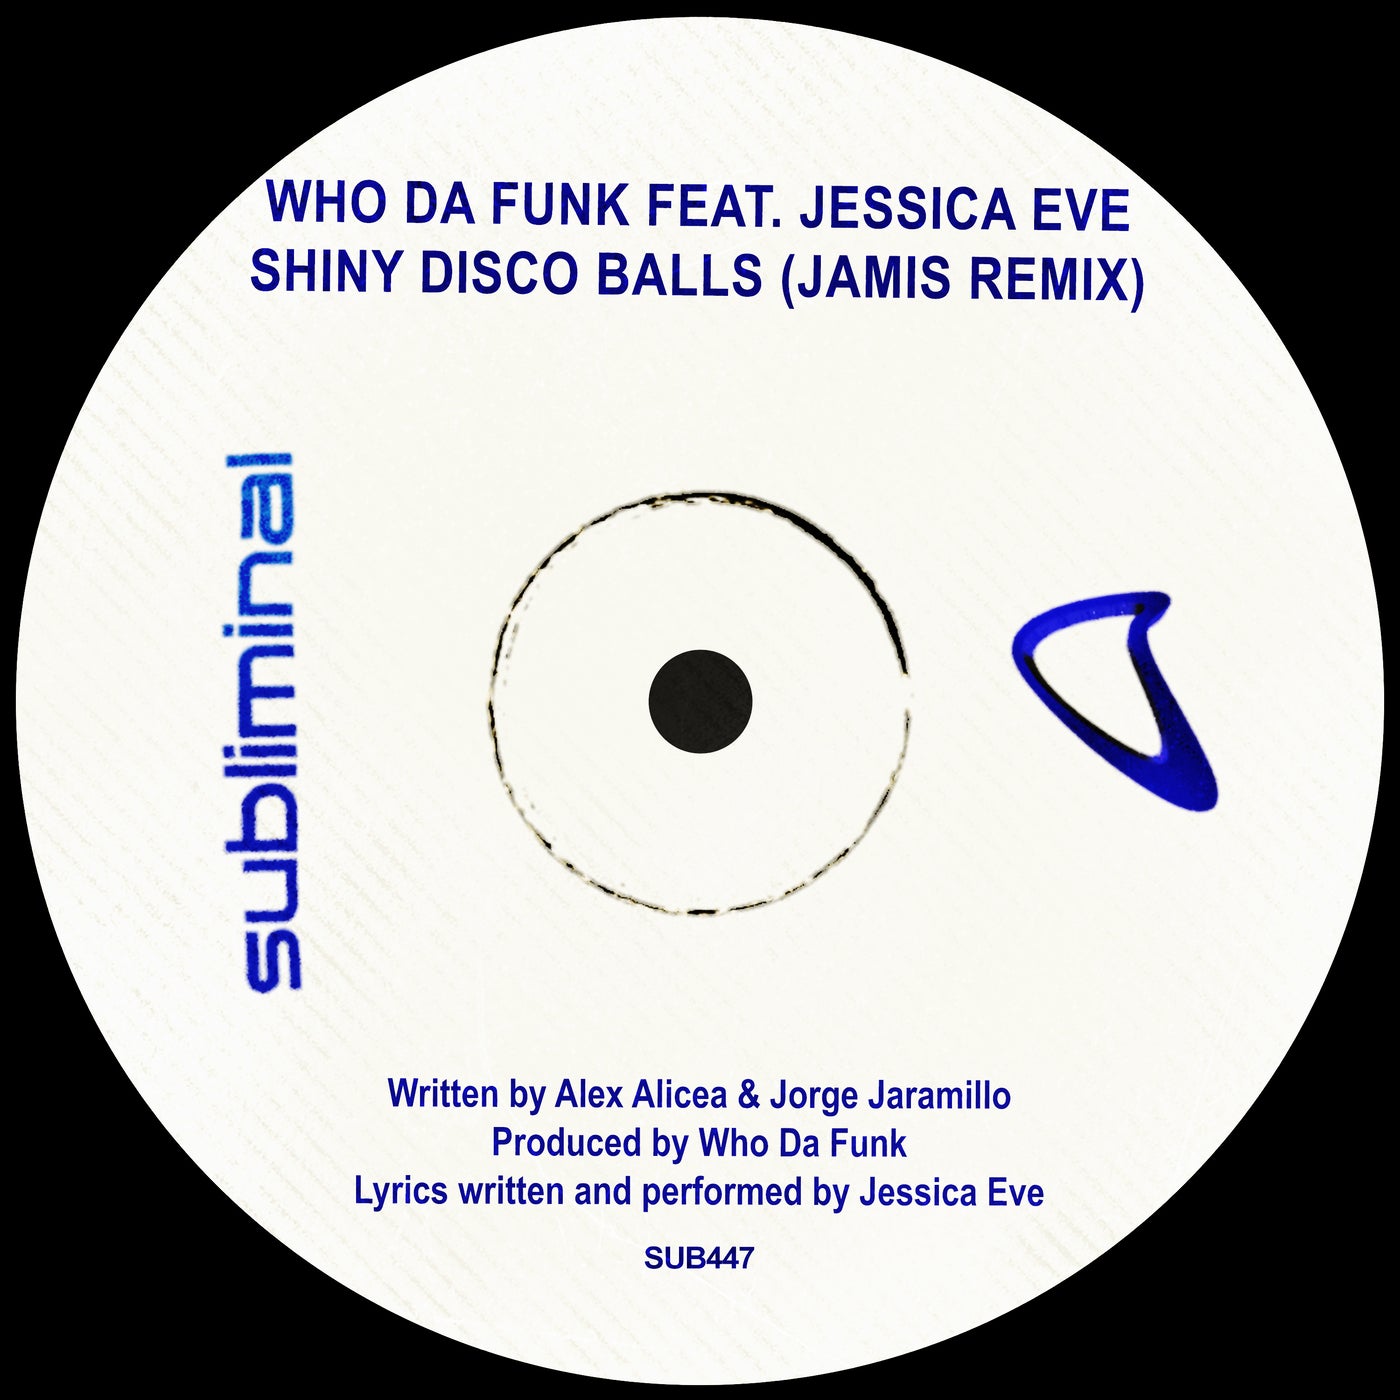 Who Da Funk - Shiny Disco Balls - Jamis Remix [SUB447]